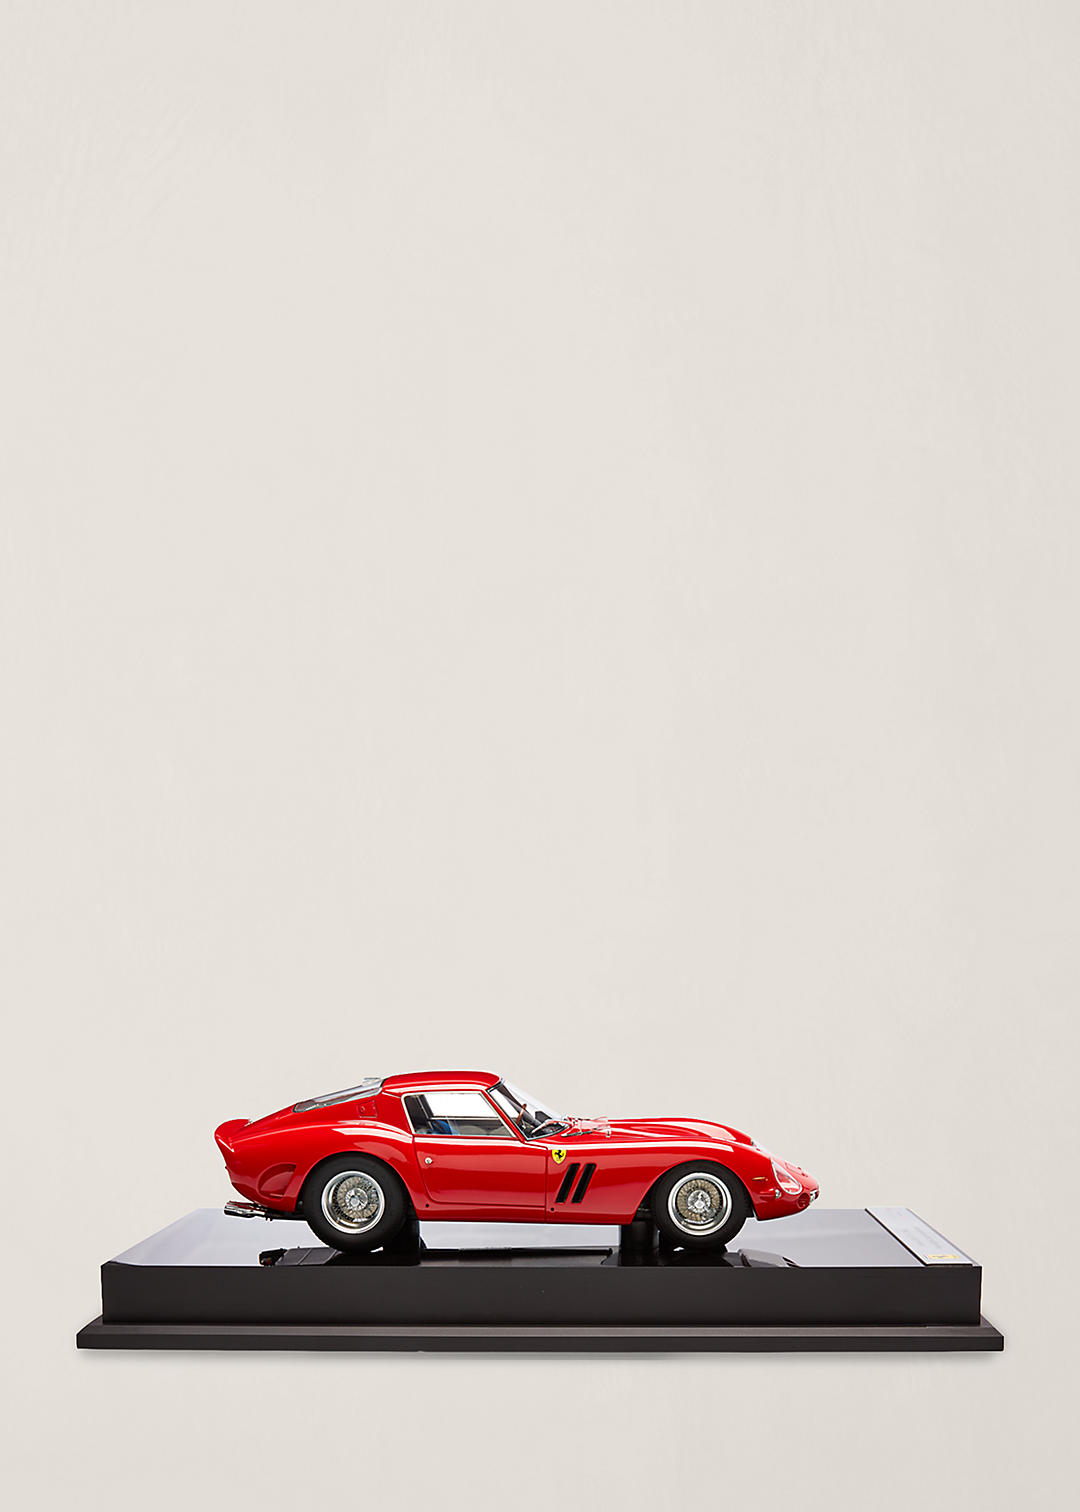 Ralph Lauren Home Ferrari 250 GTO 2